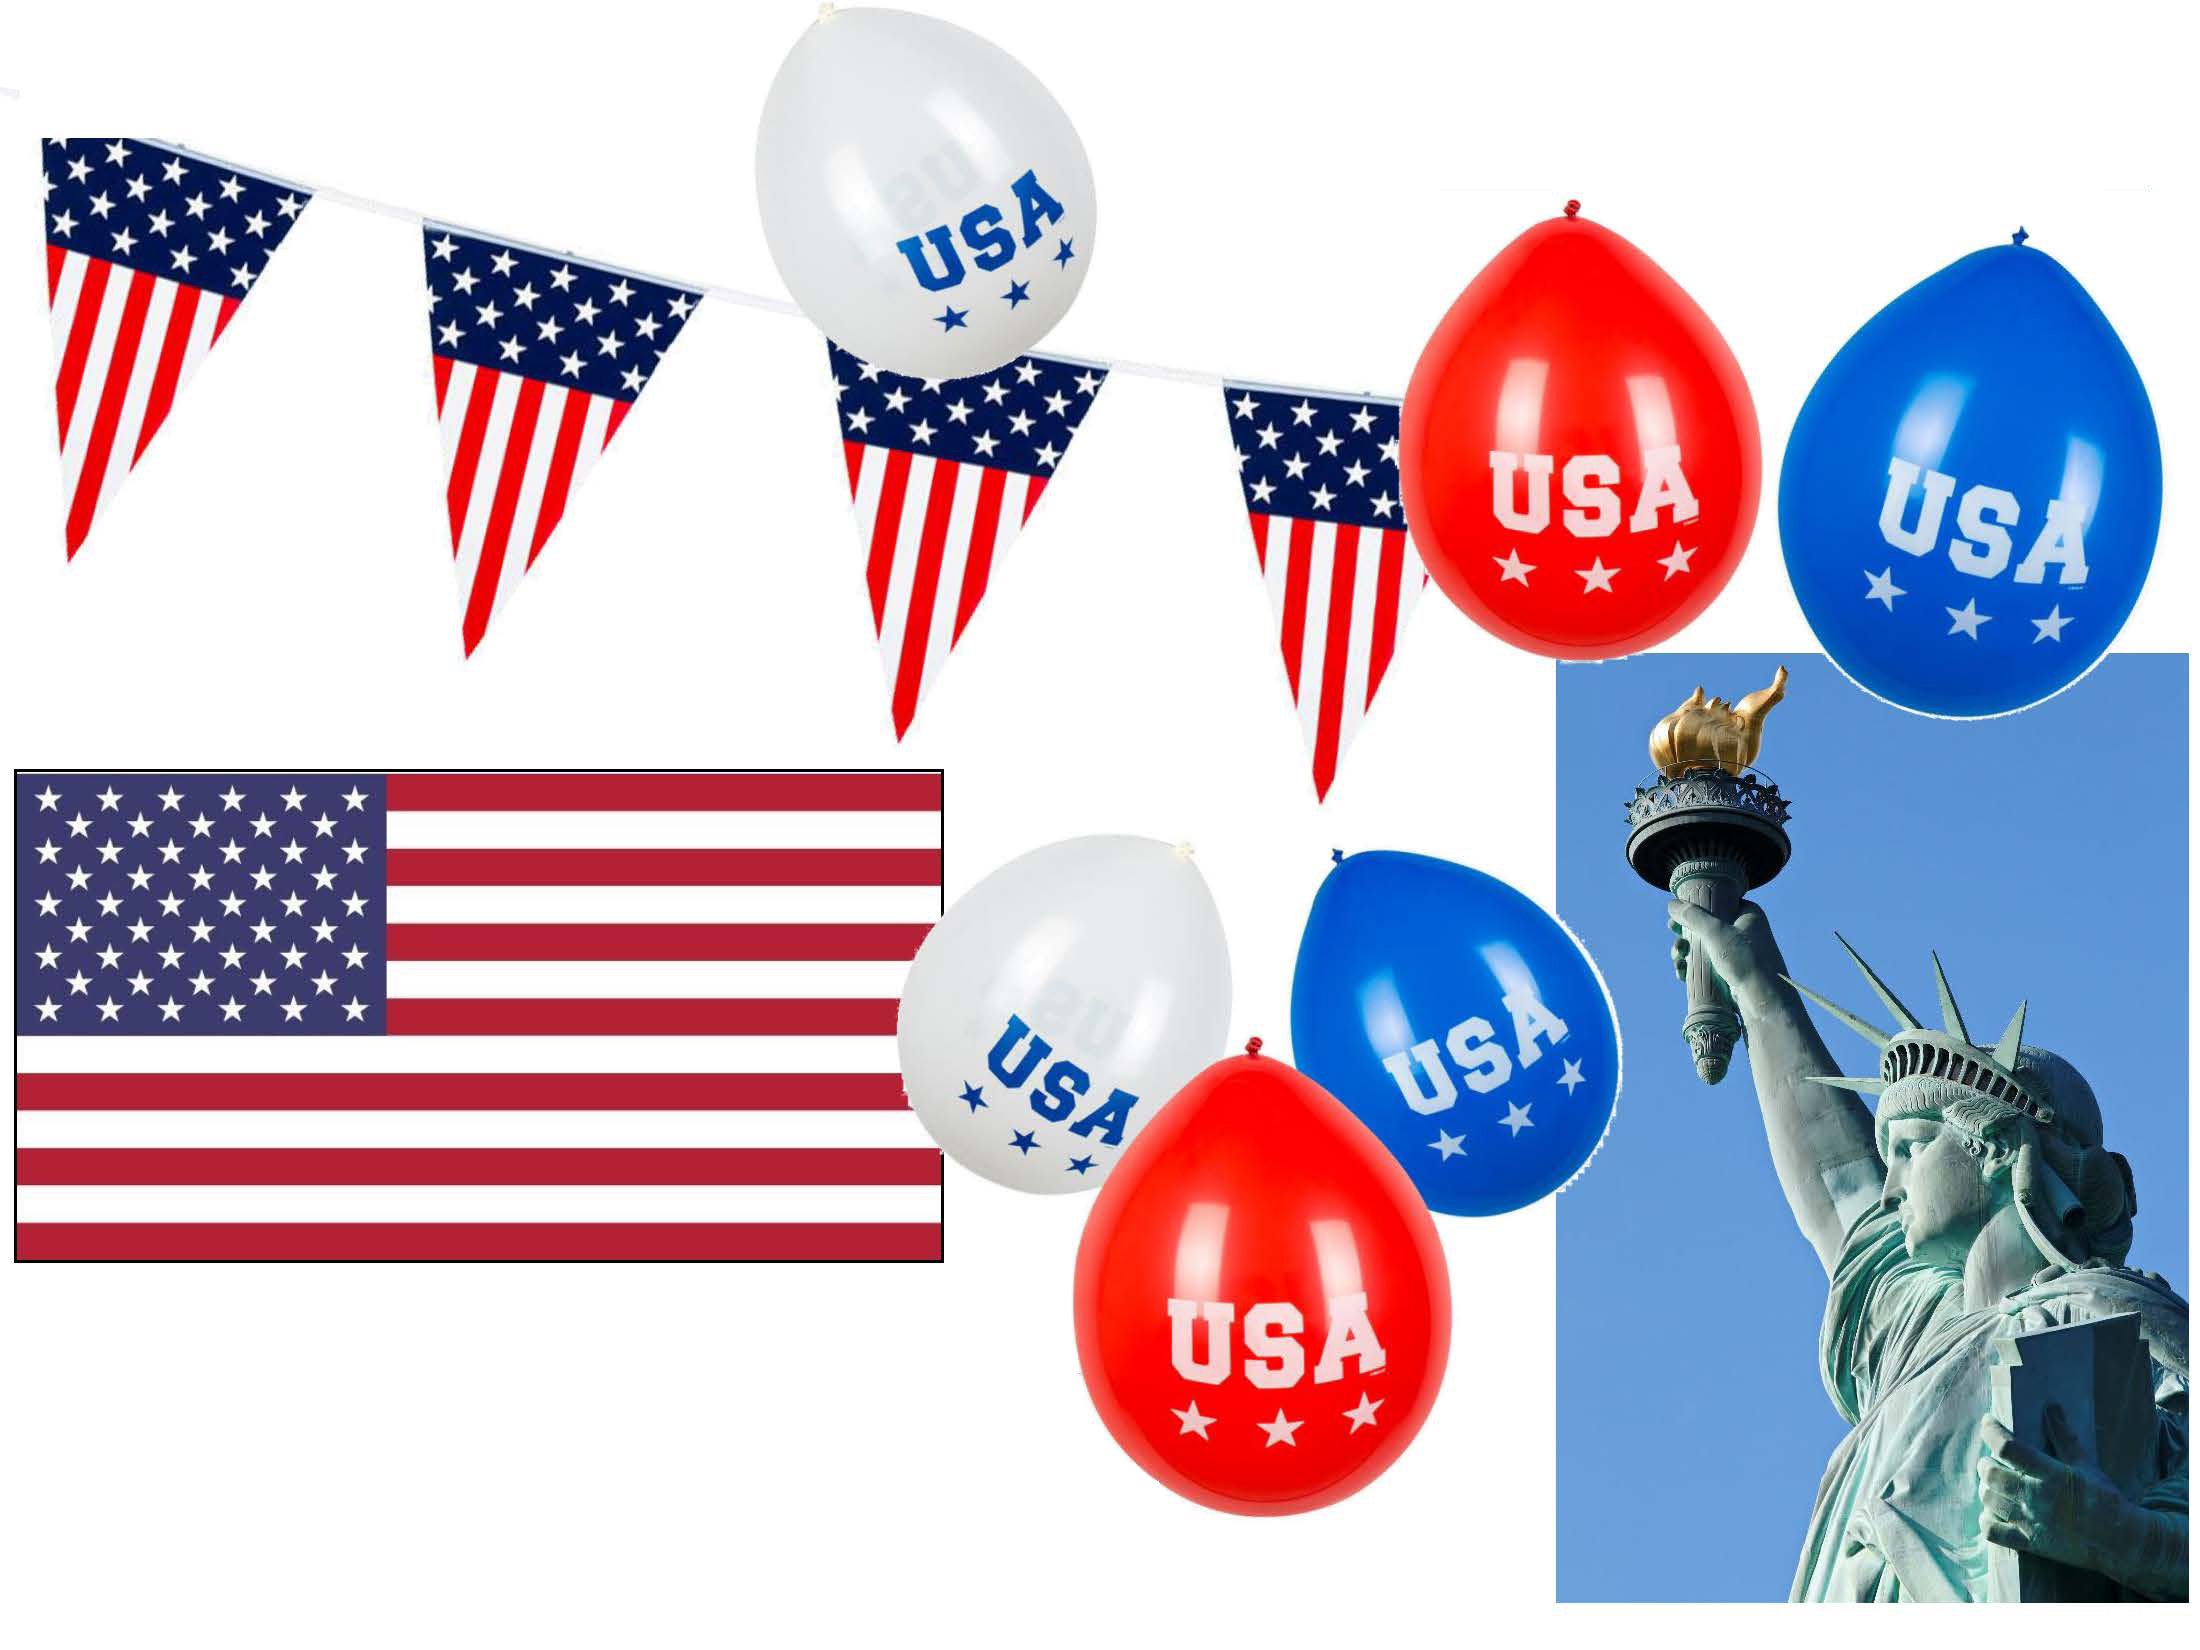 Le kit USA Image 1